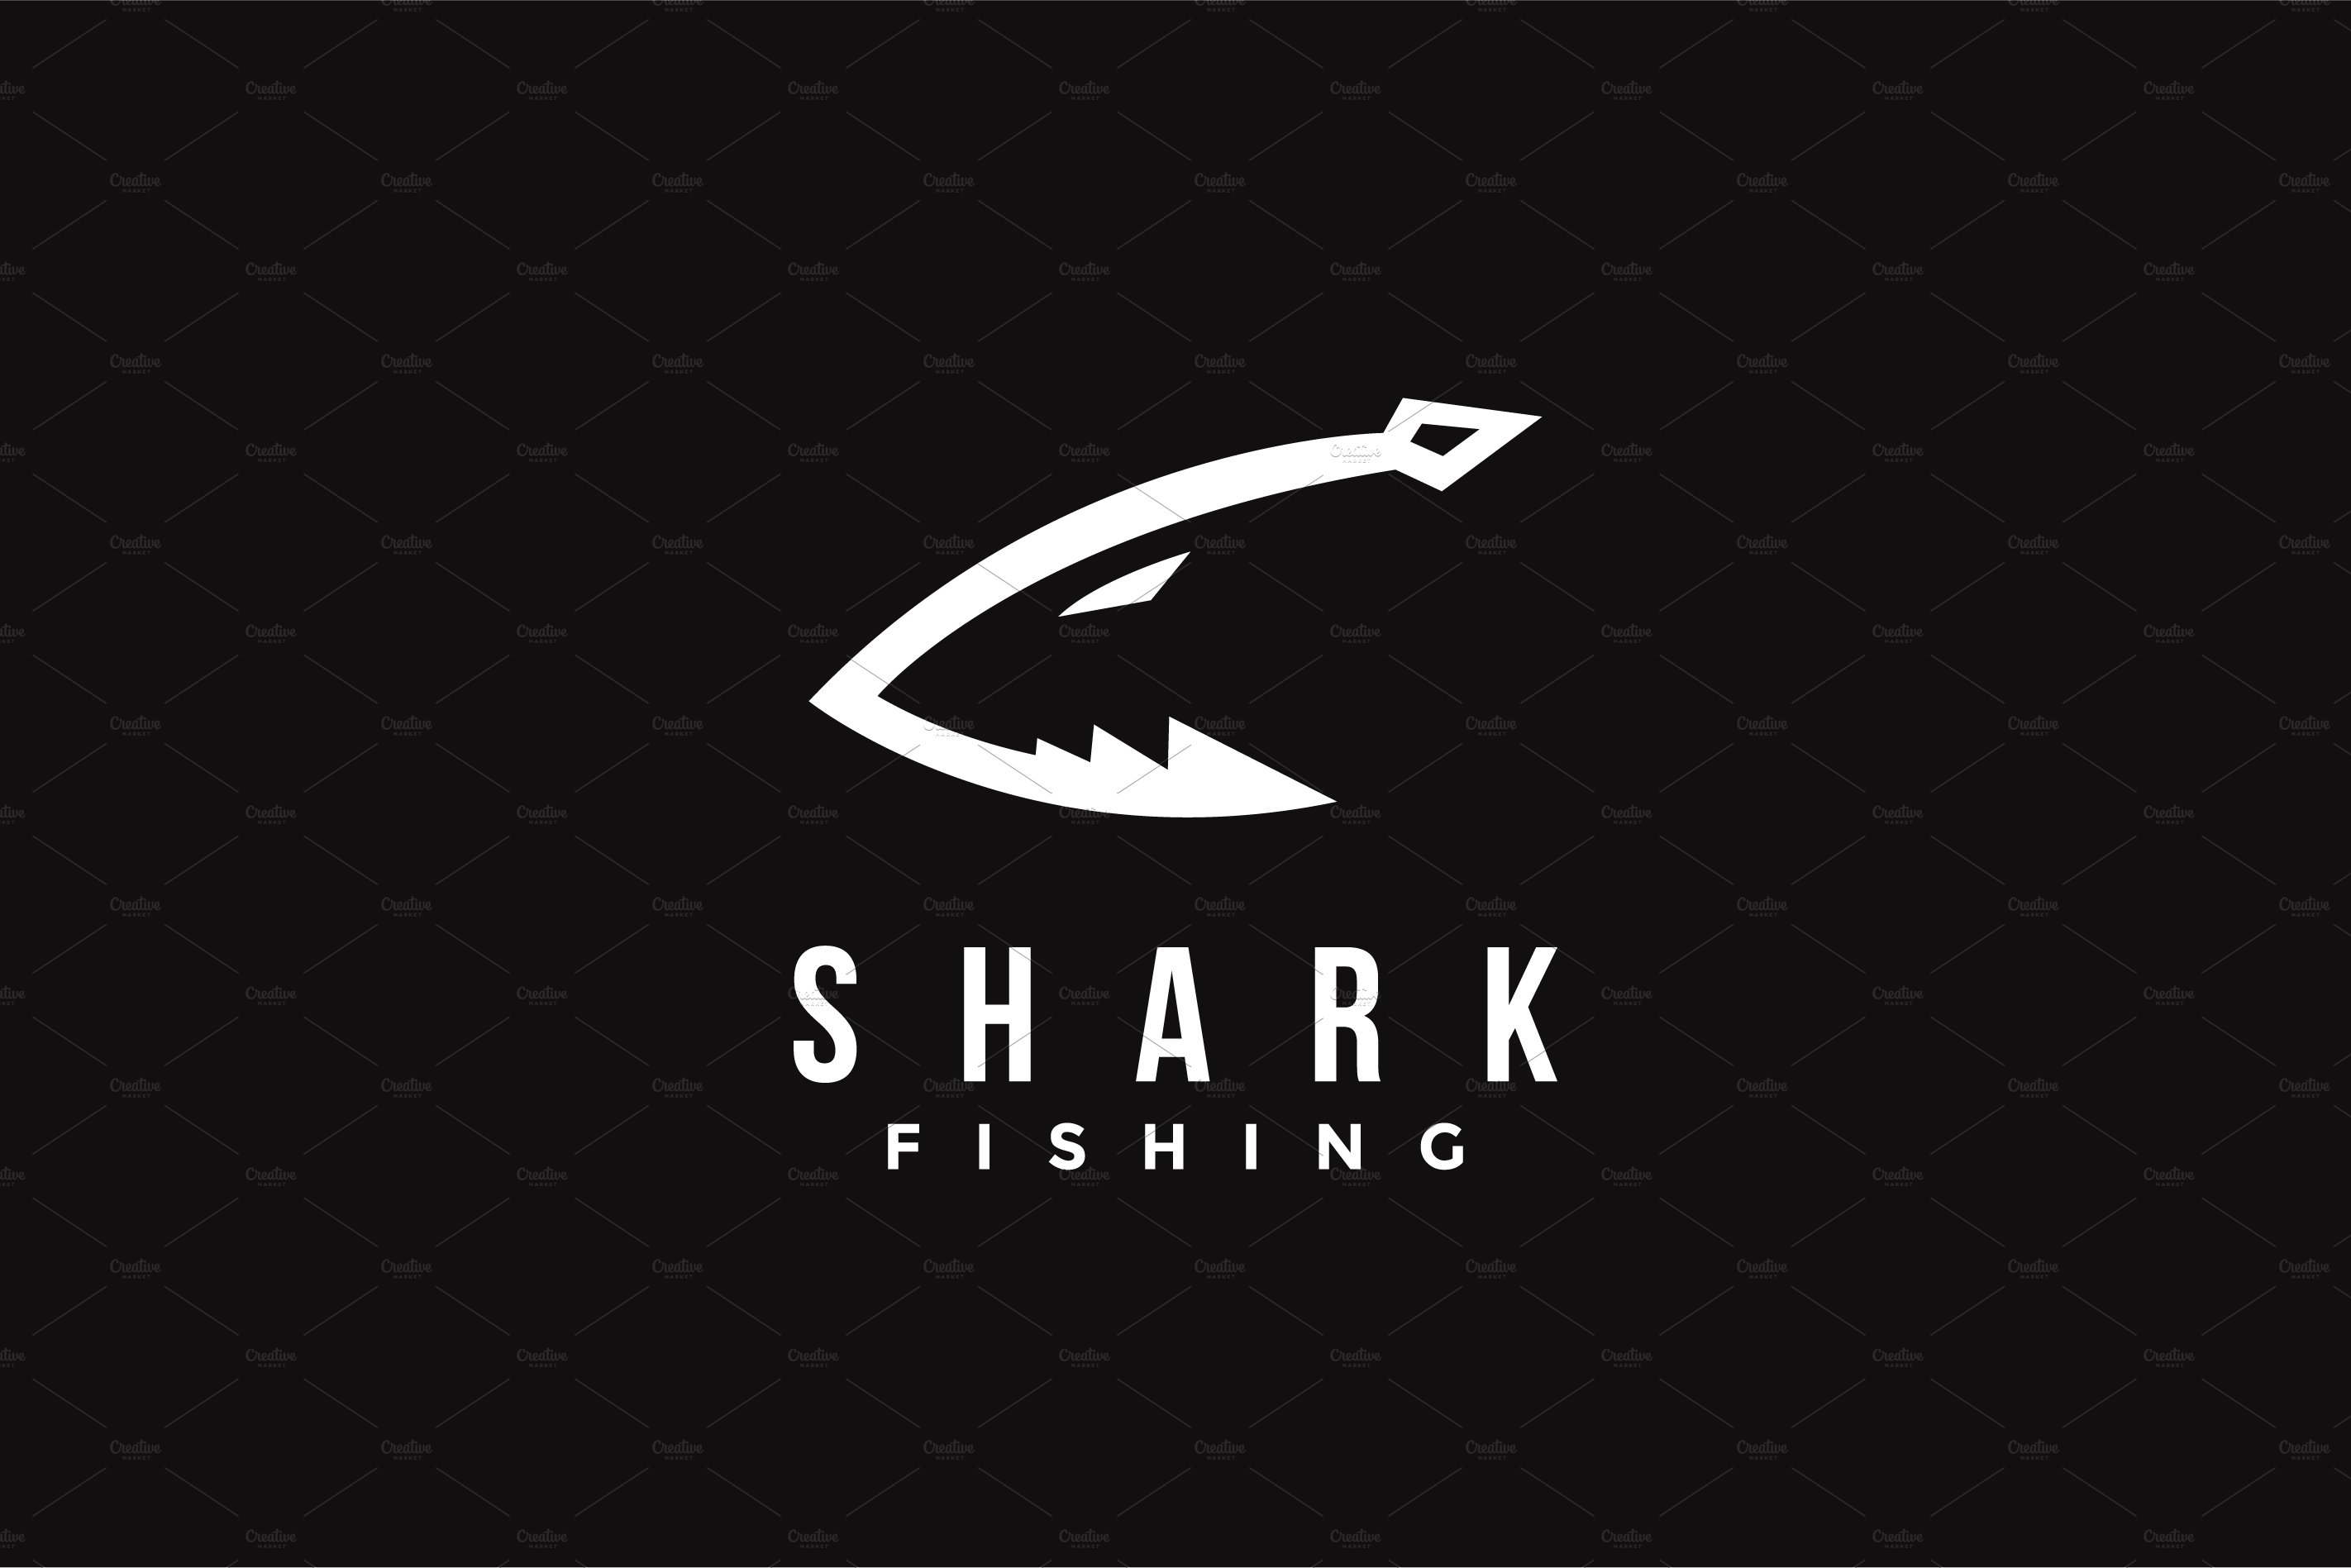 Fishing hook and shark logo cover image.